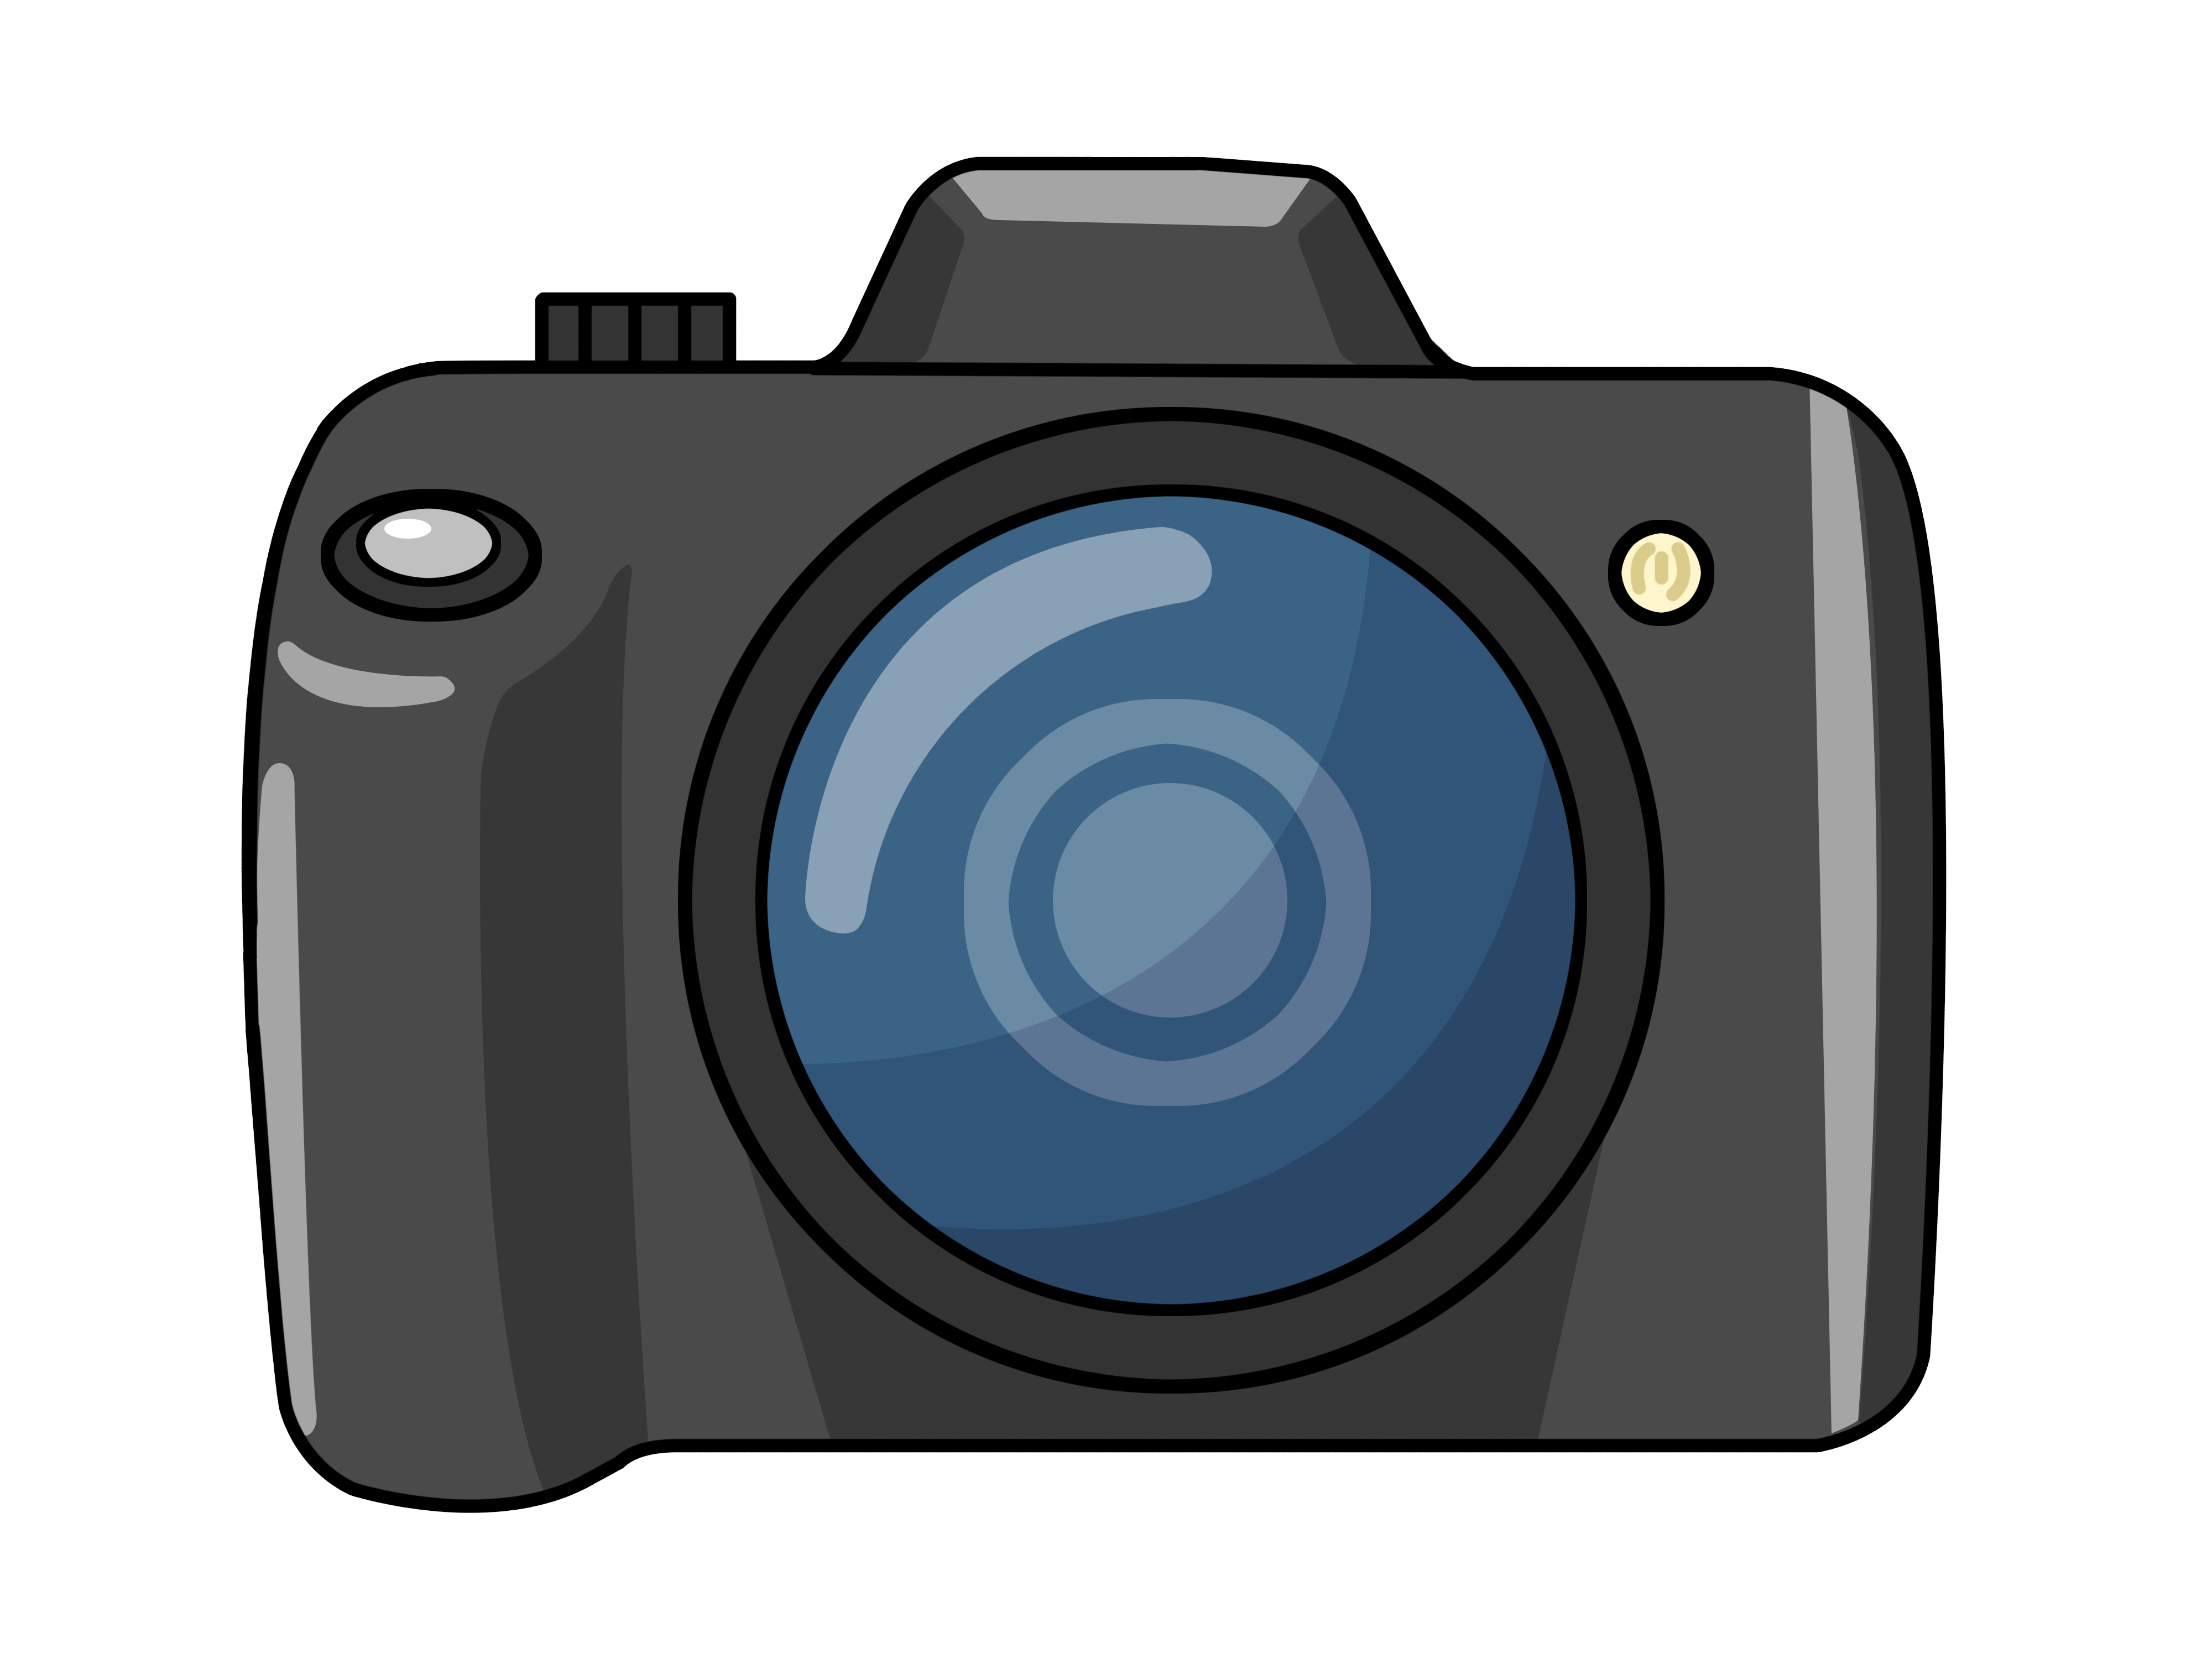 Free Cartoon Camera Cliparts, Download Free Cartoon Camera Cliparts png